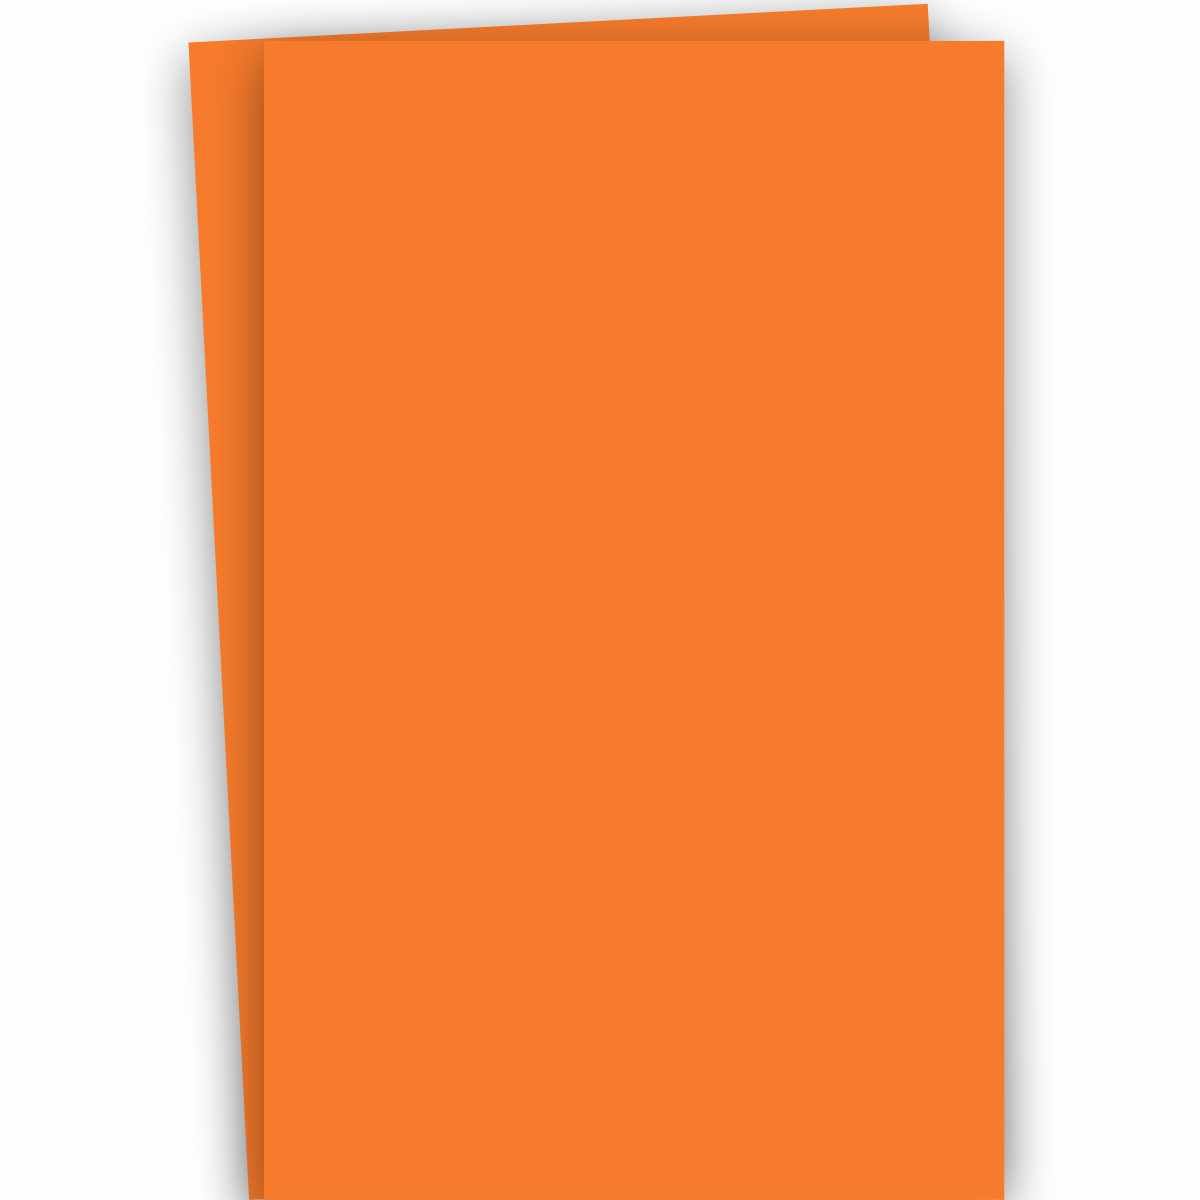 Burano ORANGE (56) - 8.5x11 Cardstock Paper - 92lb Cover (250gsm